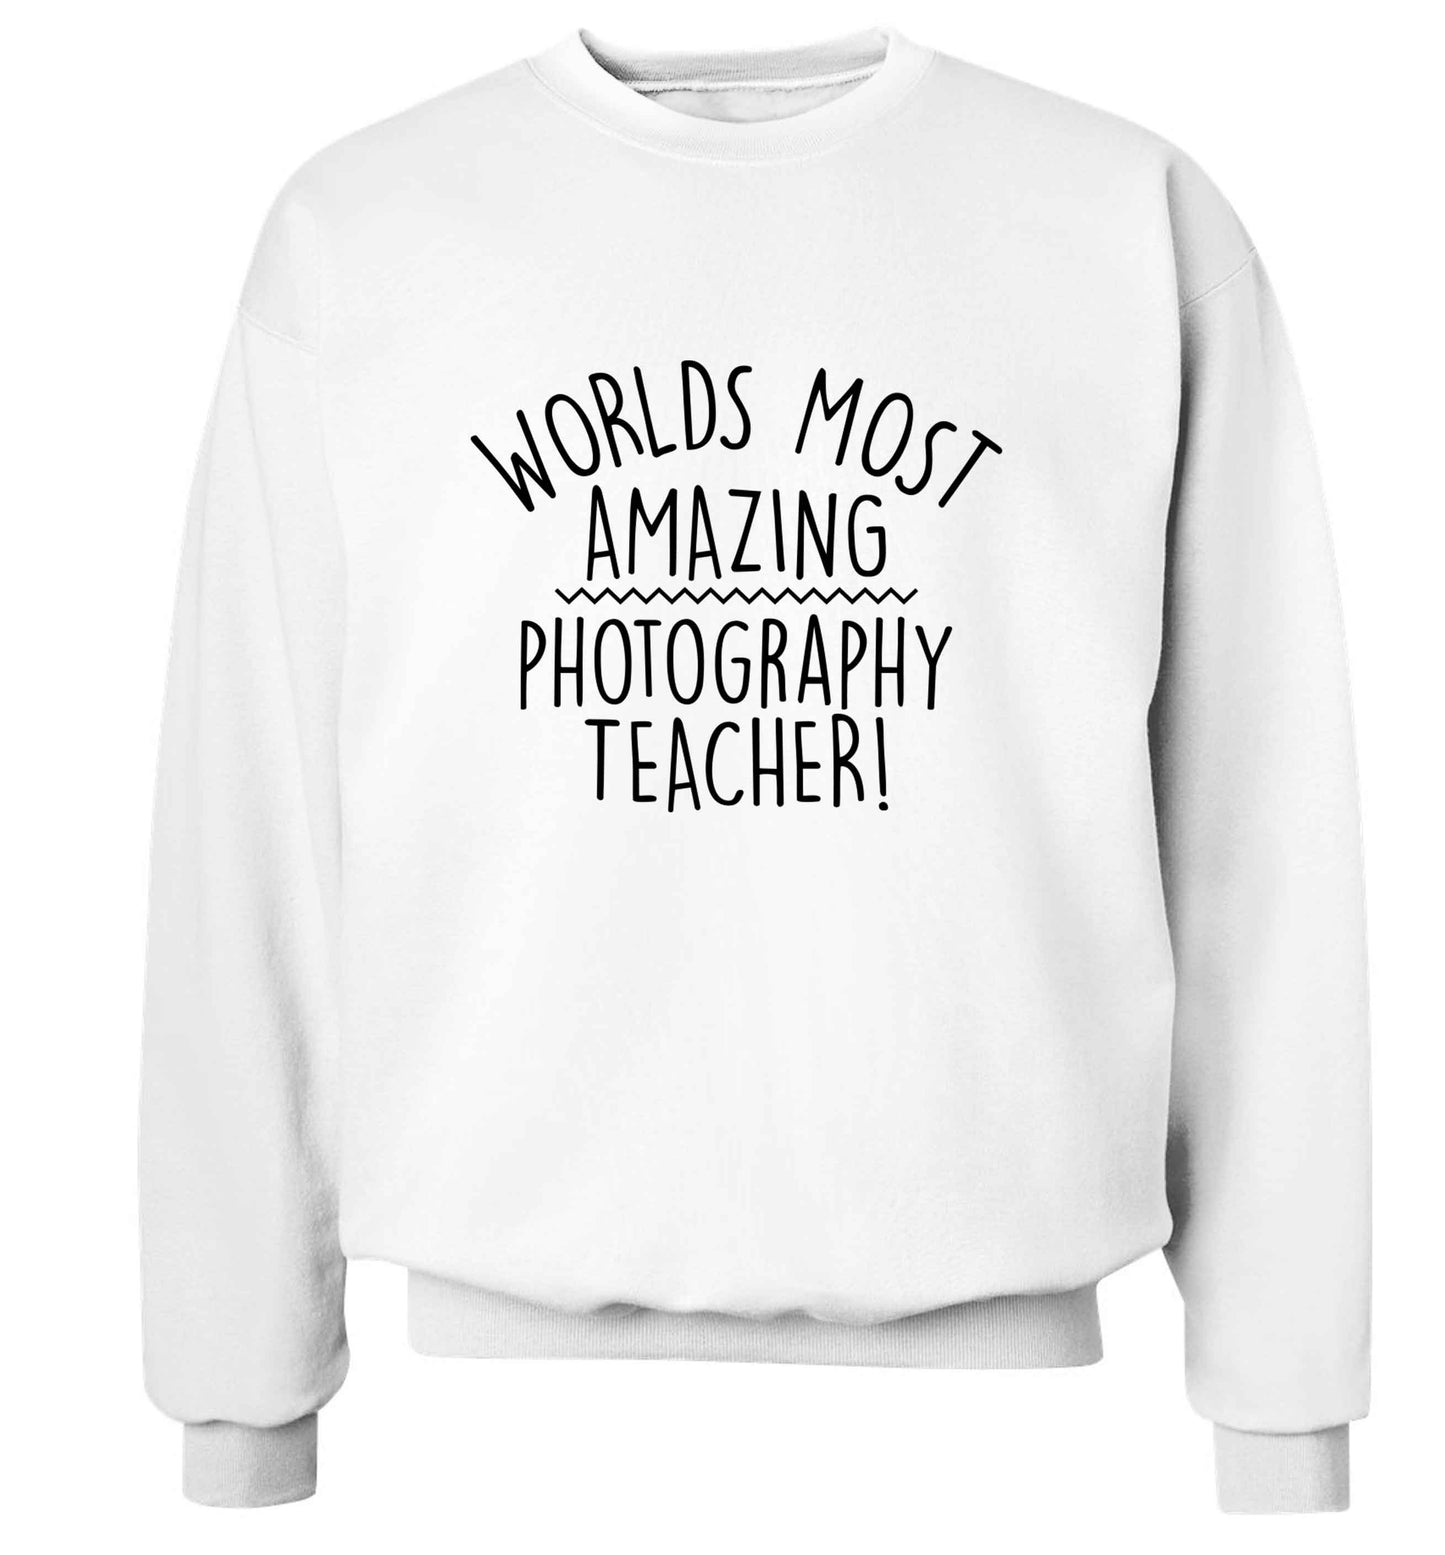 Worlds most amazing photography teacher adult's unisex white sweater 2XL